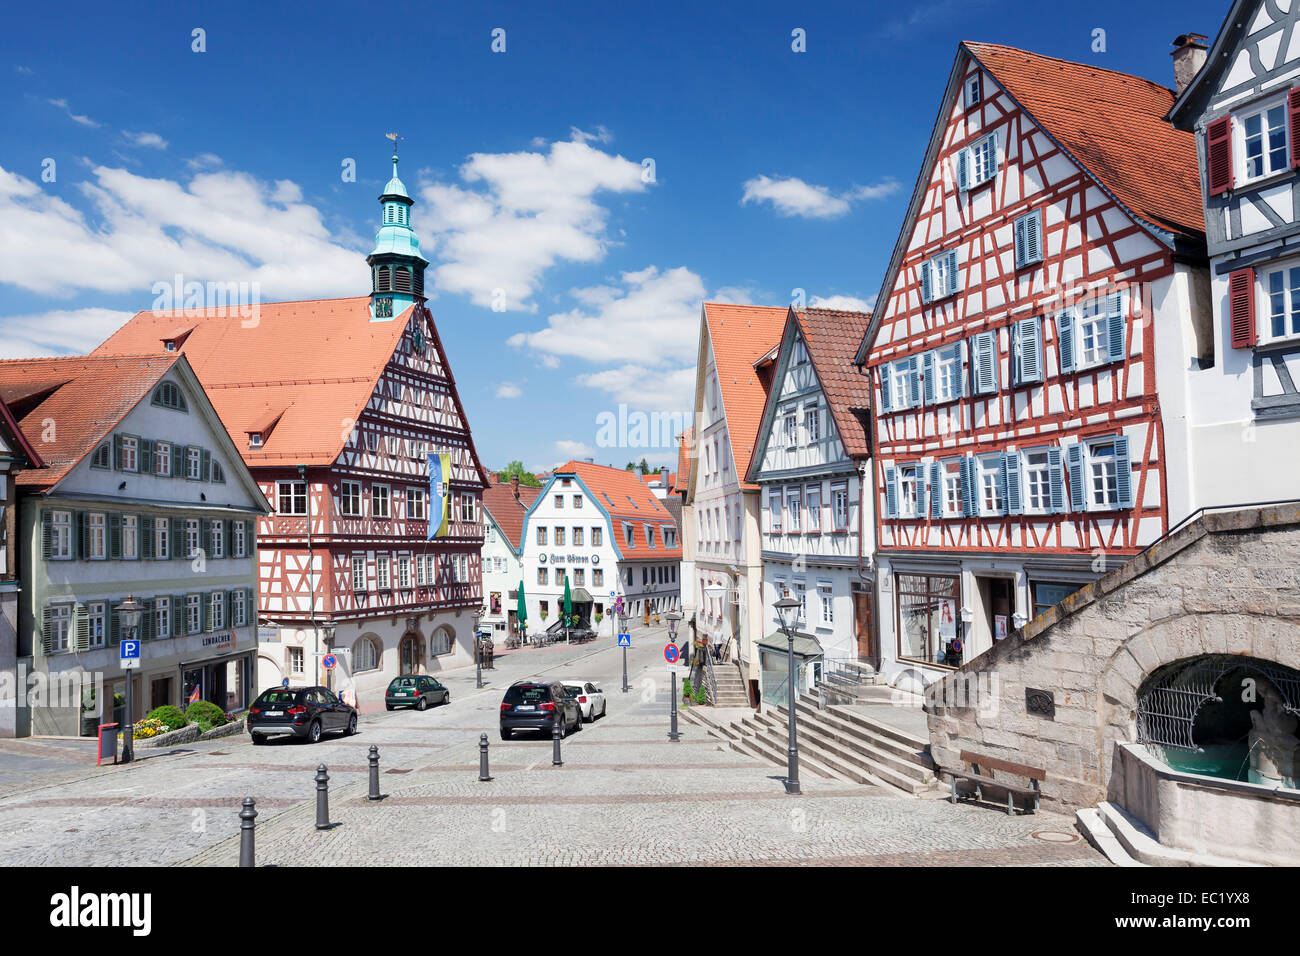 Town Hall on the market square, Backnang, Rems Murr Kreis, Baden Württemberg, Germany Stock Photo